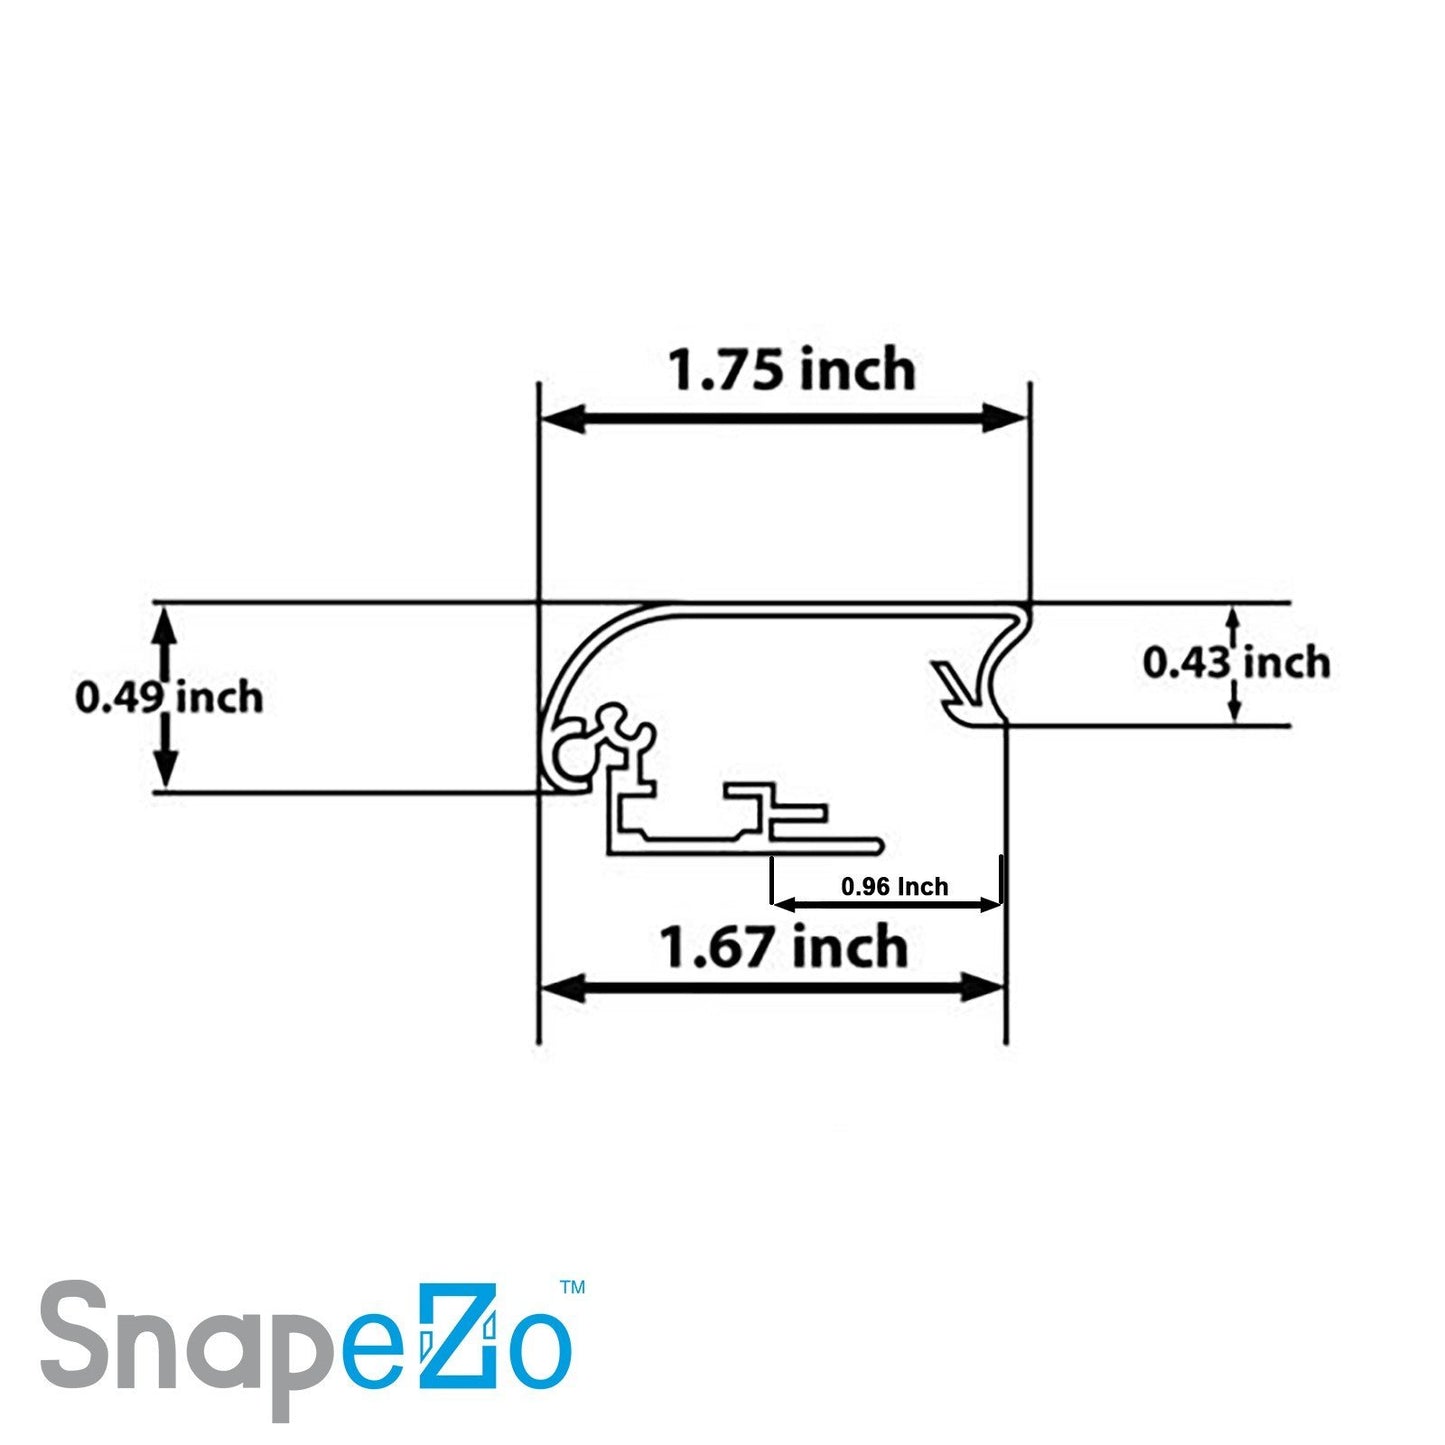 36x49 Silver SnapeZo® Snap Frame - 1.7" Profile